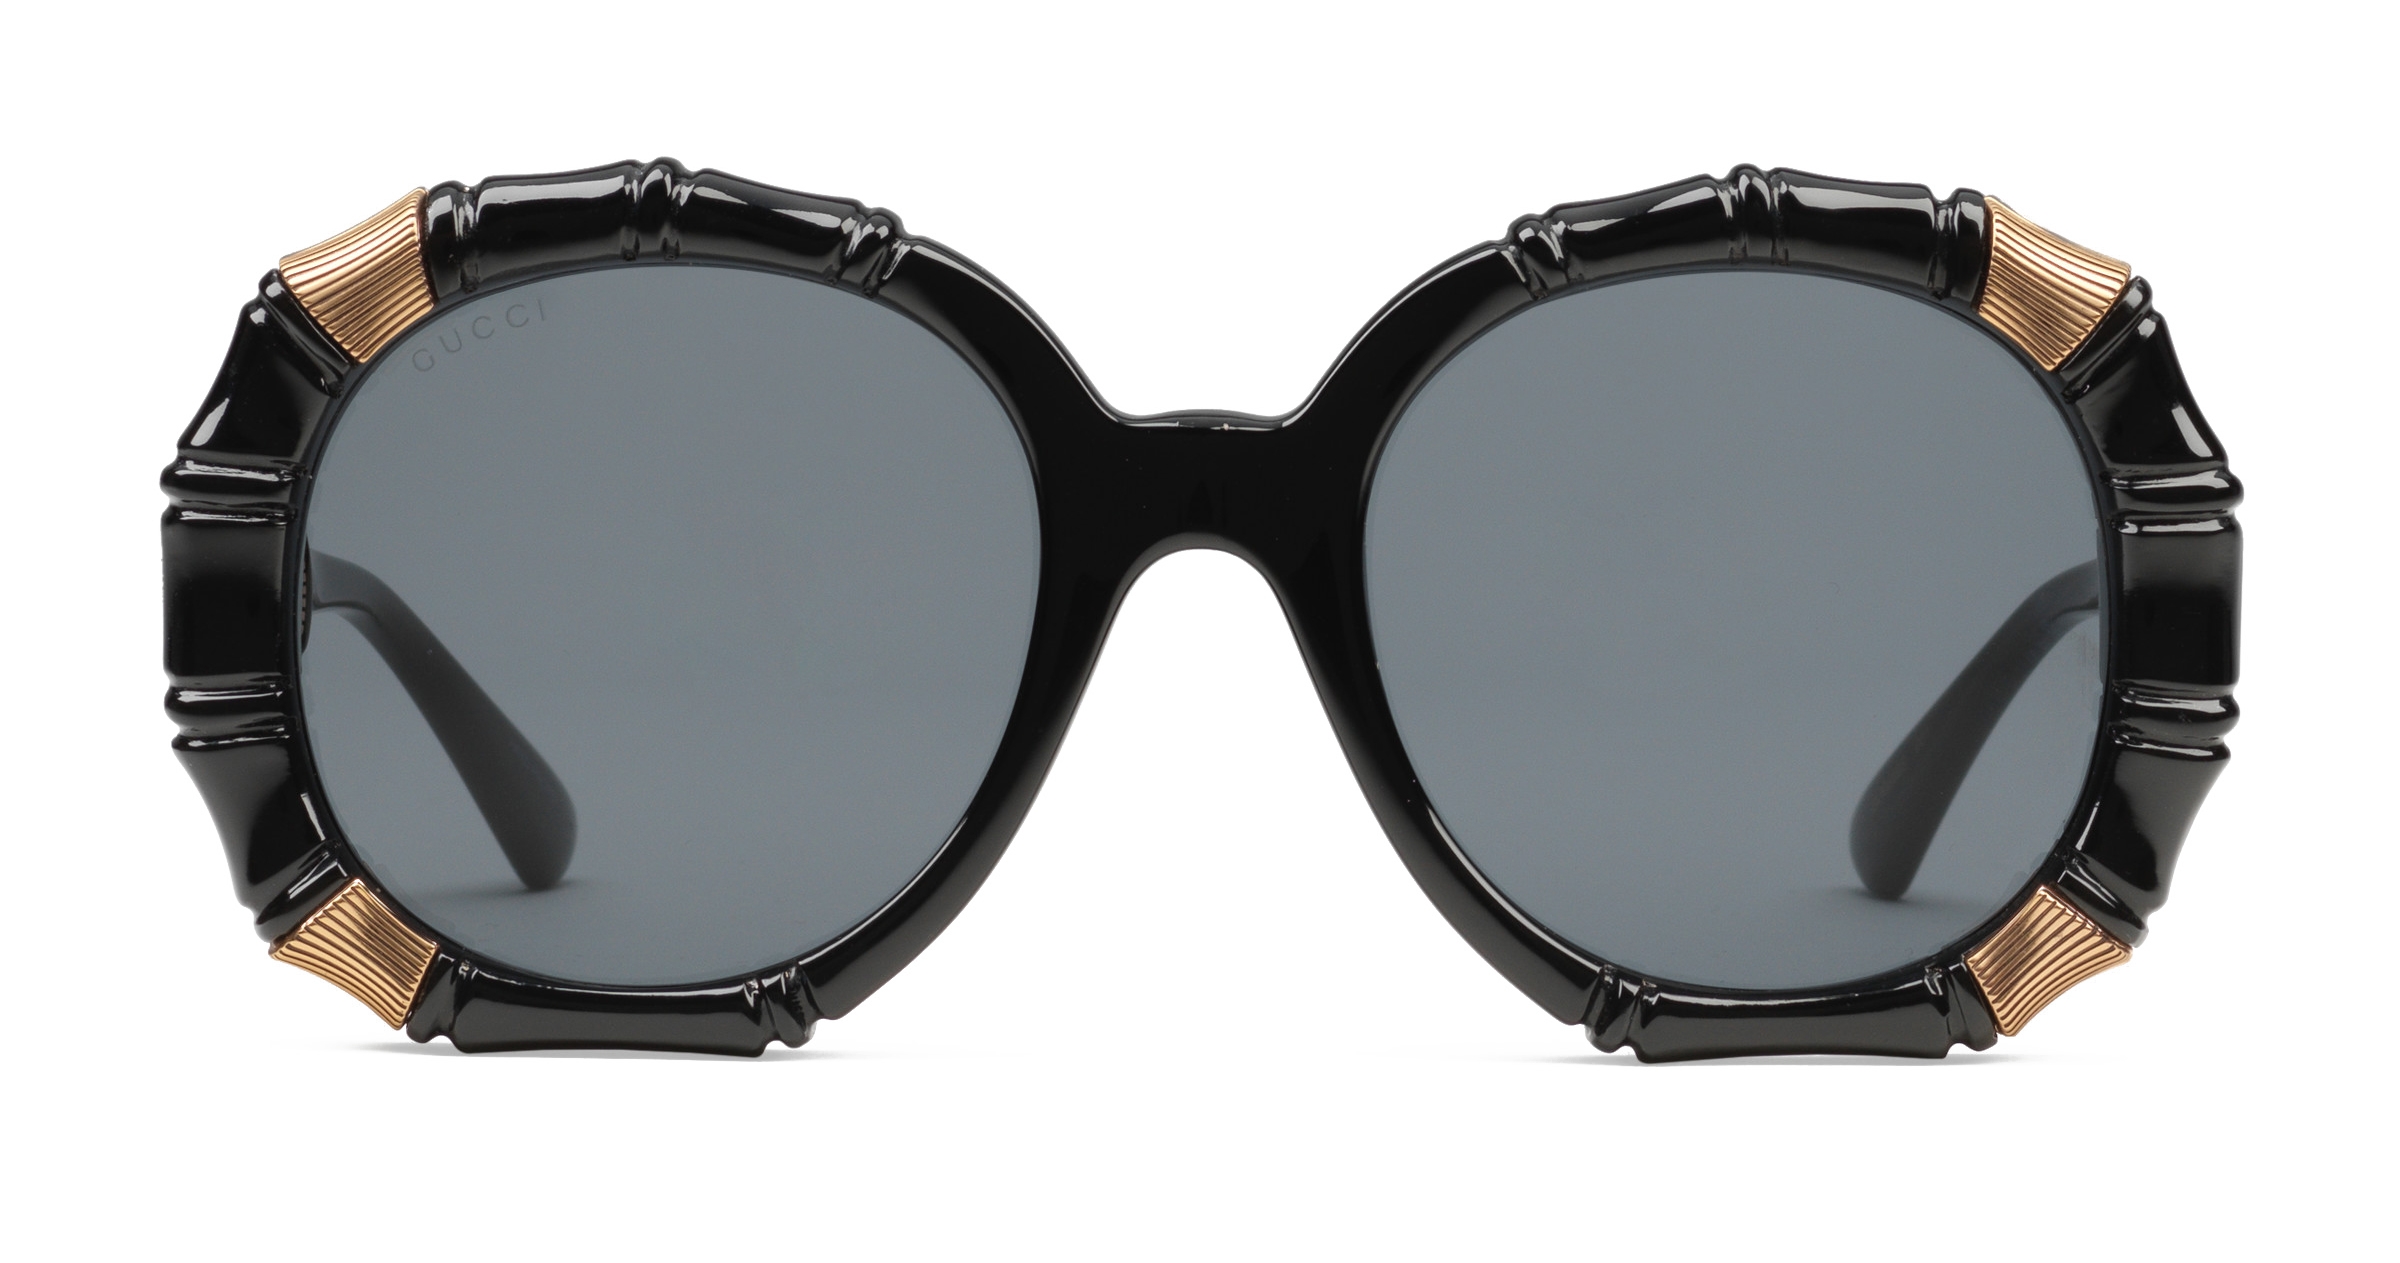 Gucci - Bamboo Effect Round Sunglasses 